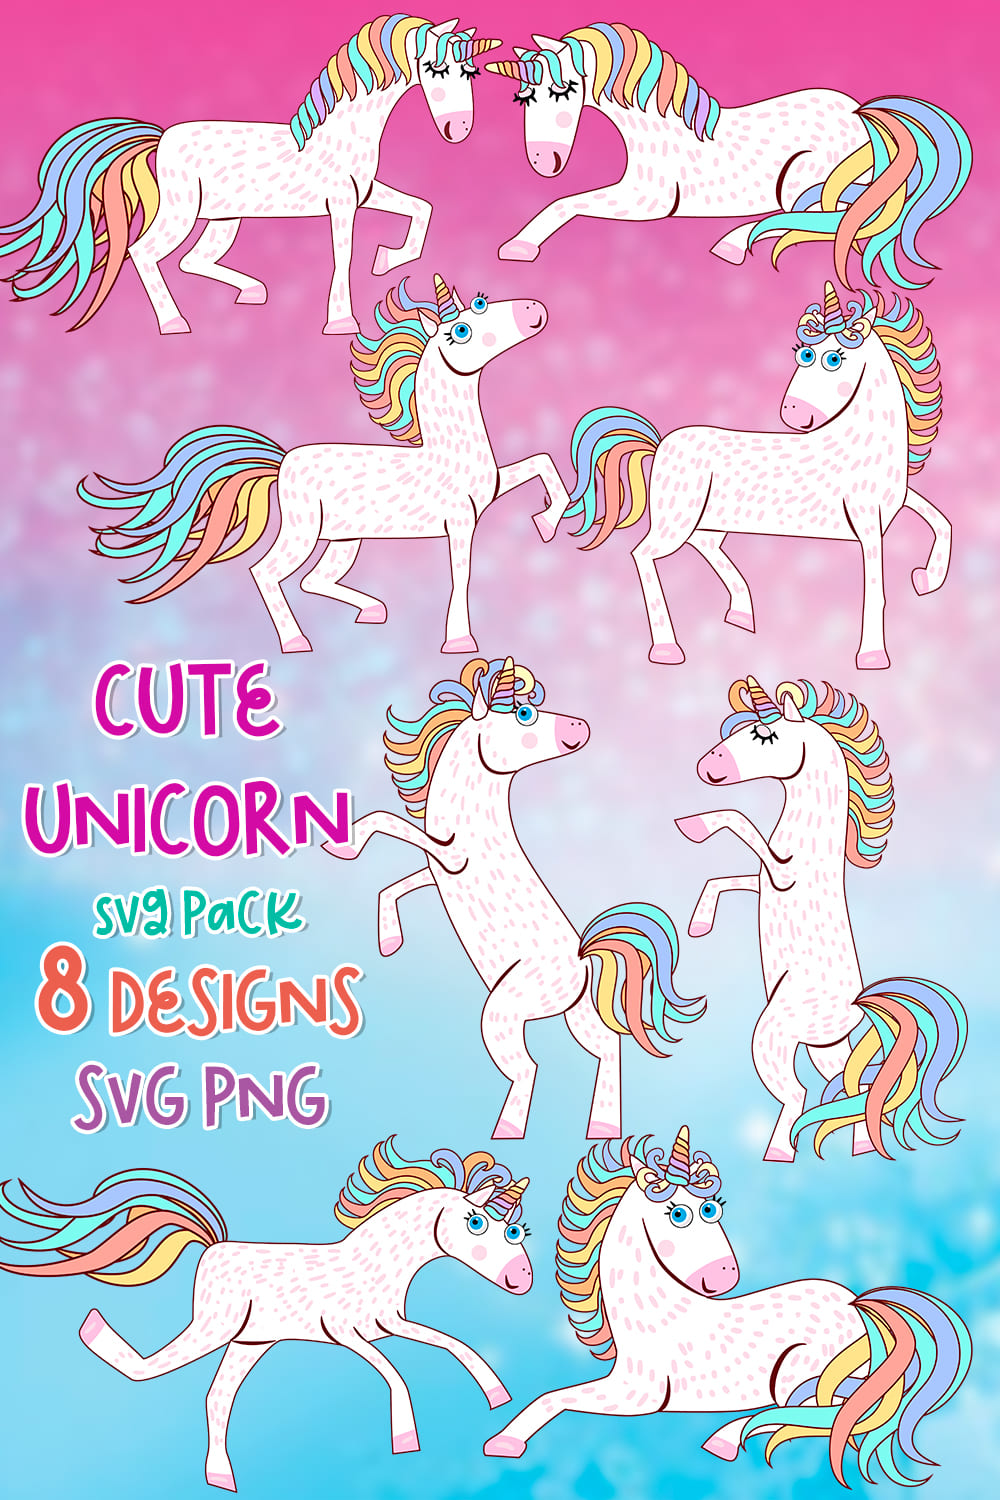 Cute Unicorn SVG - pinterest image preview.